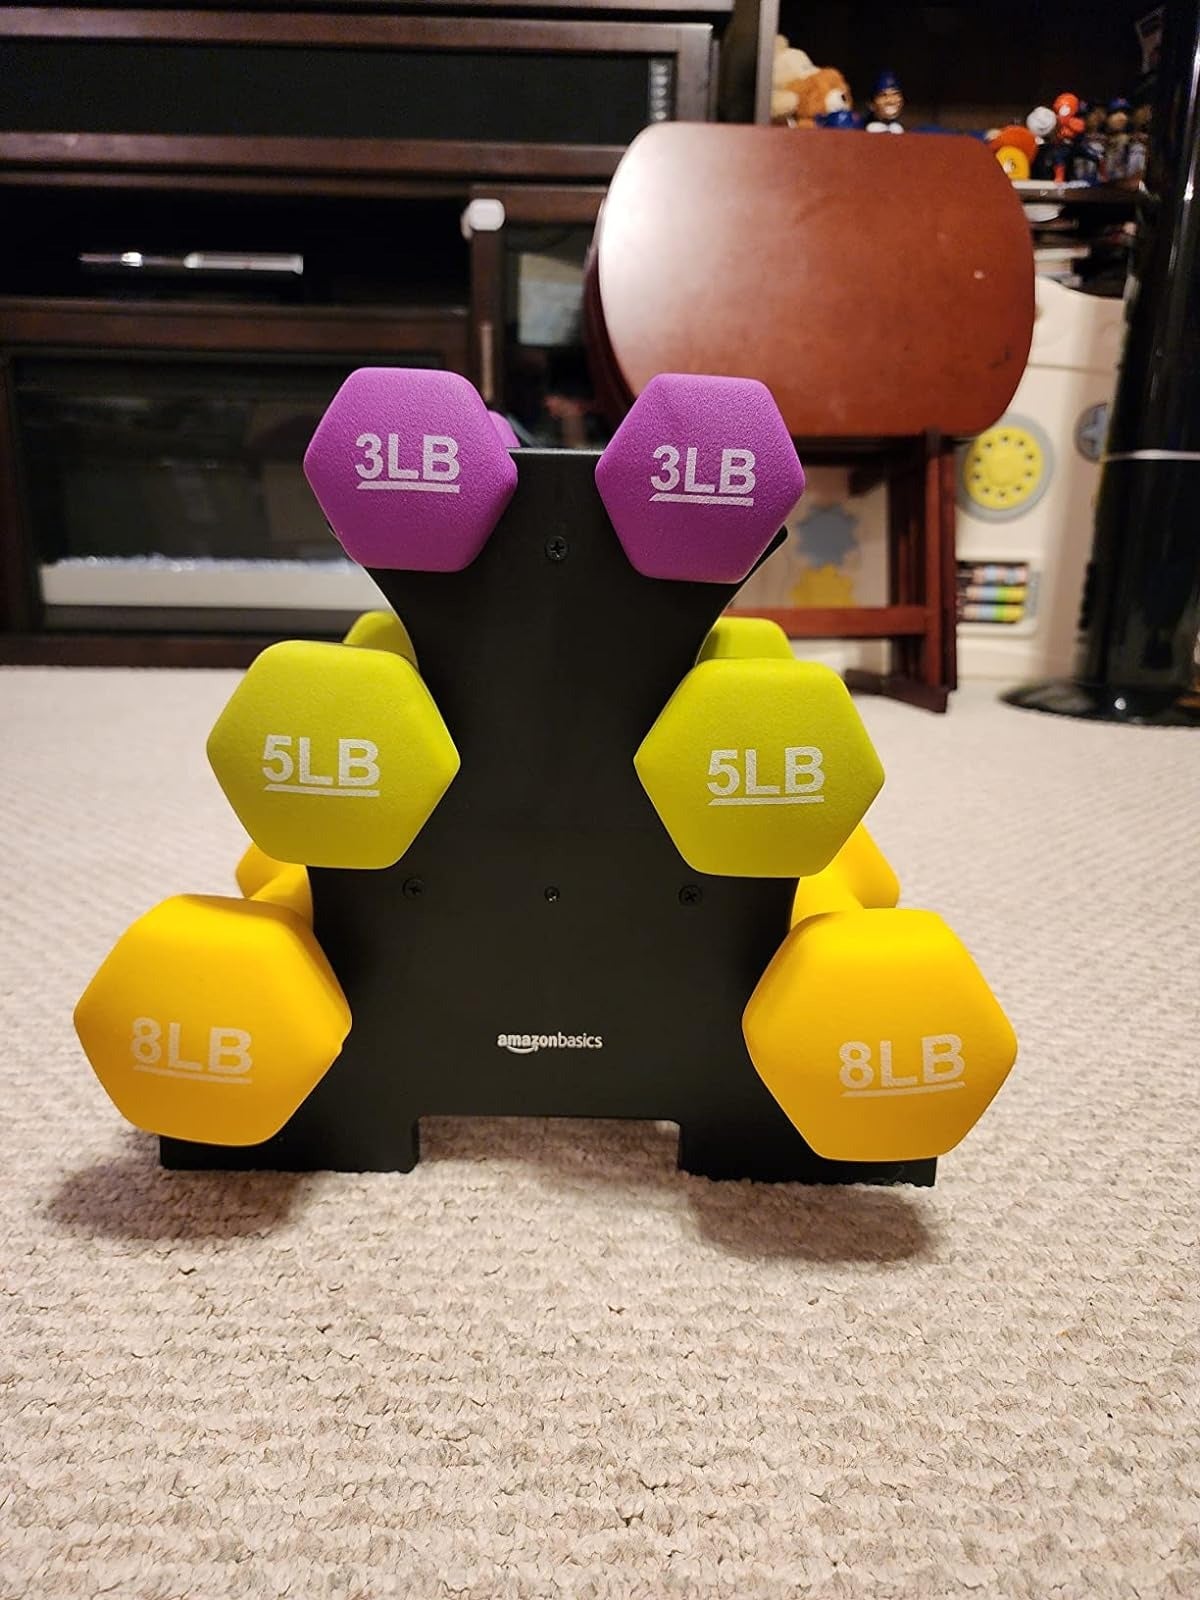 Basics Neoprene Hexagon Workout Dumbbell Hand Weight, 10-Pound, Navy  Blue - Set of 2, Dumbbells -  Canada